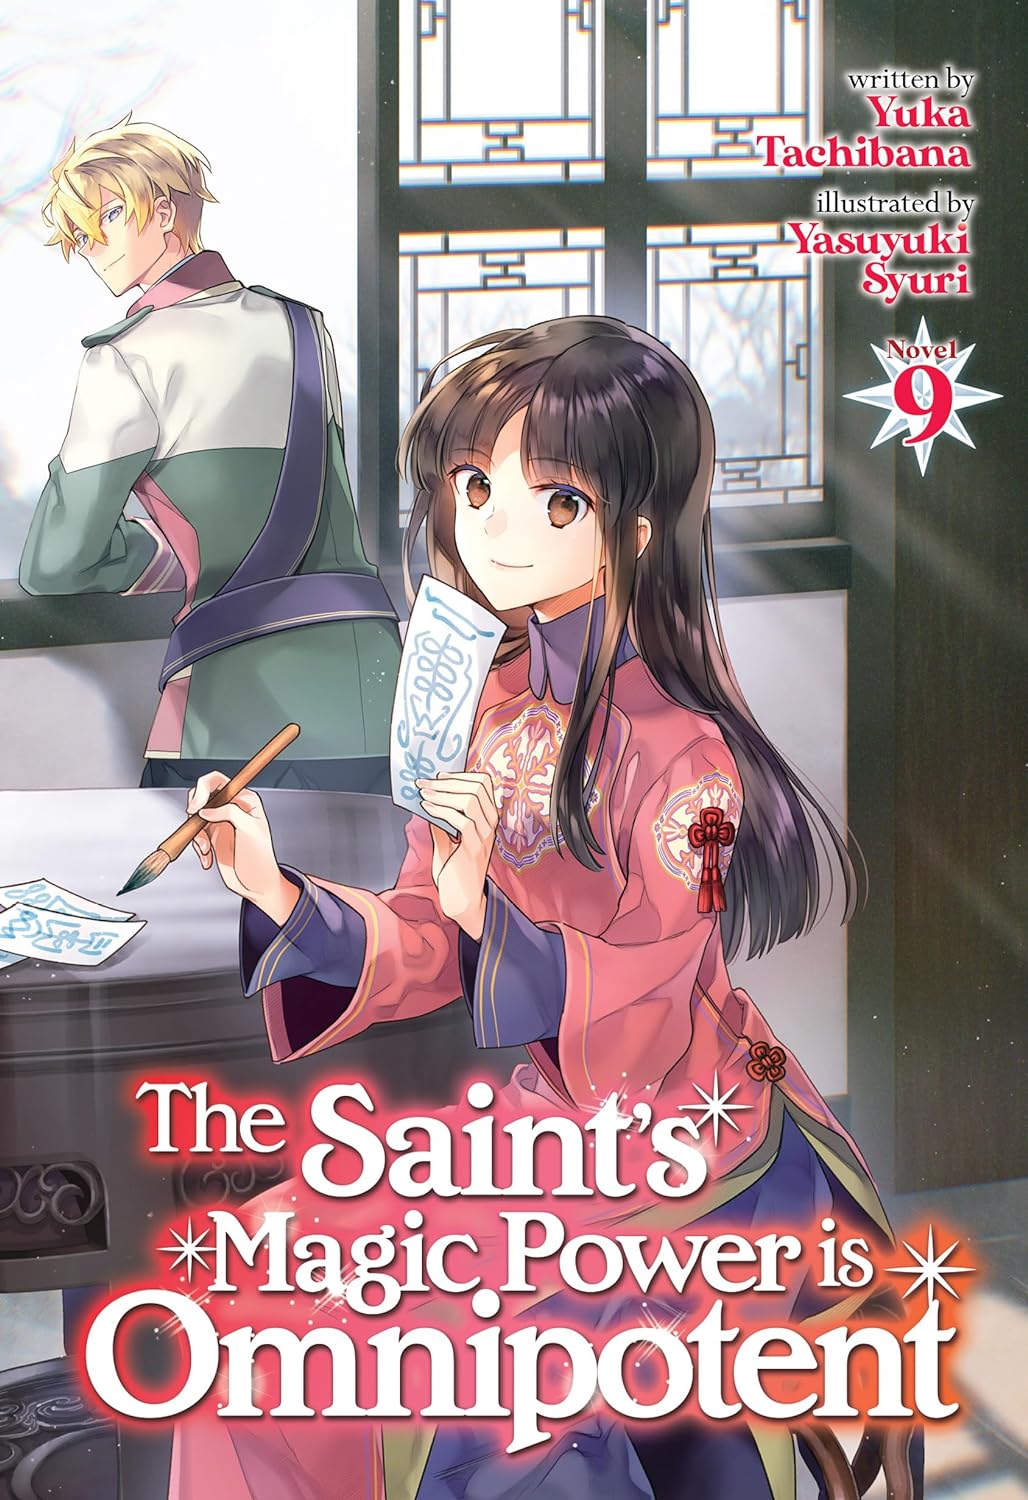 The Saint's Magic Power Is Omnipotent (Light Novel) Vol. 09